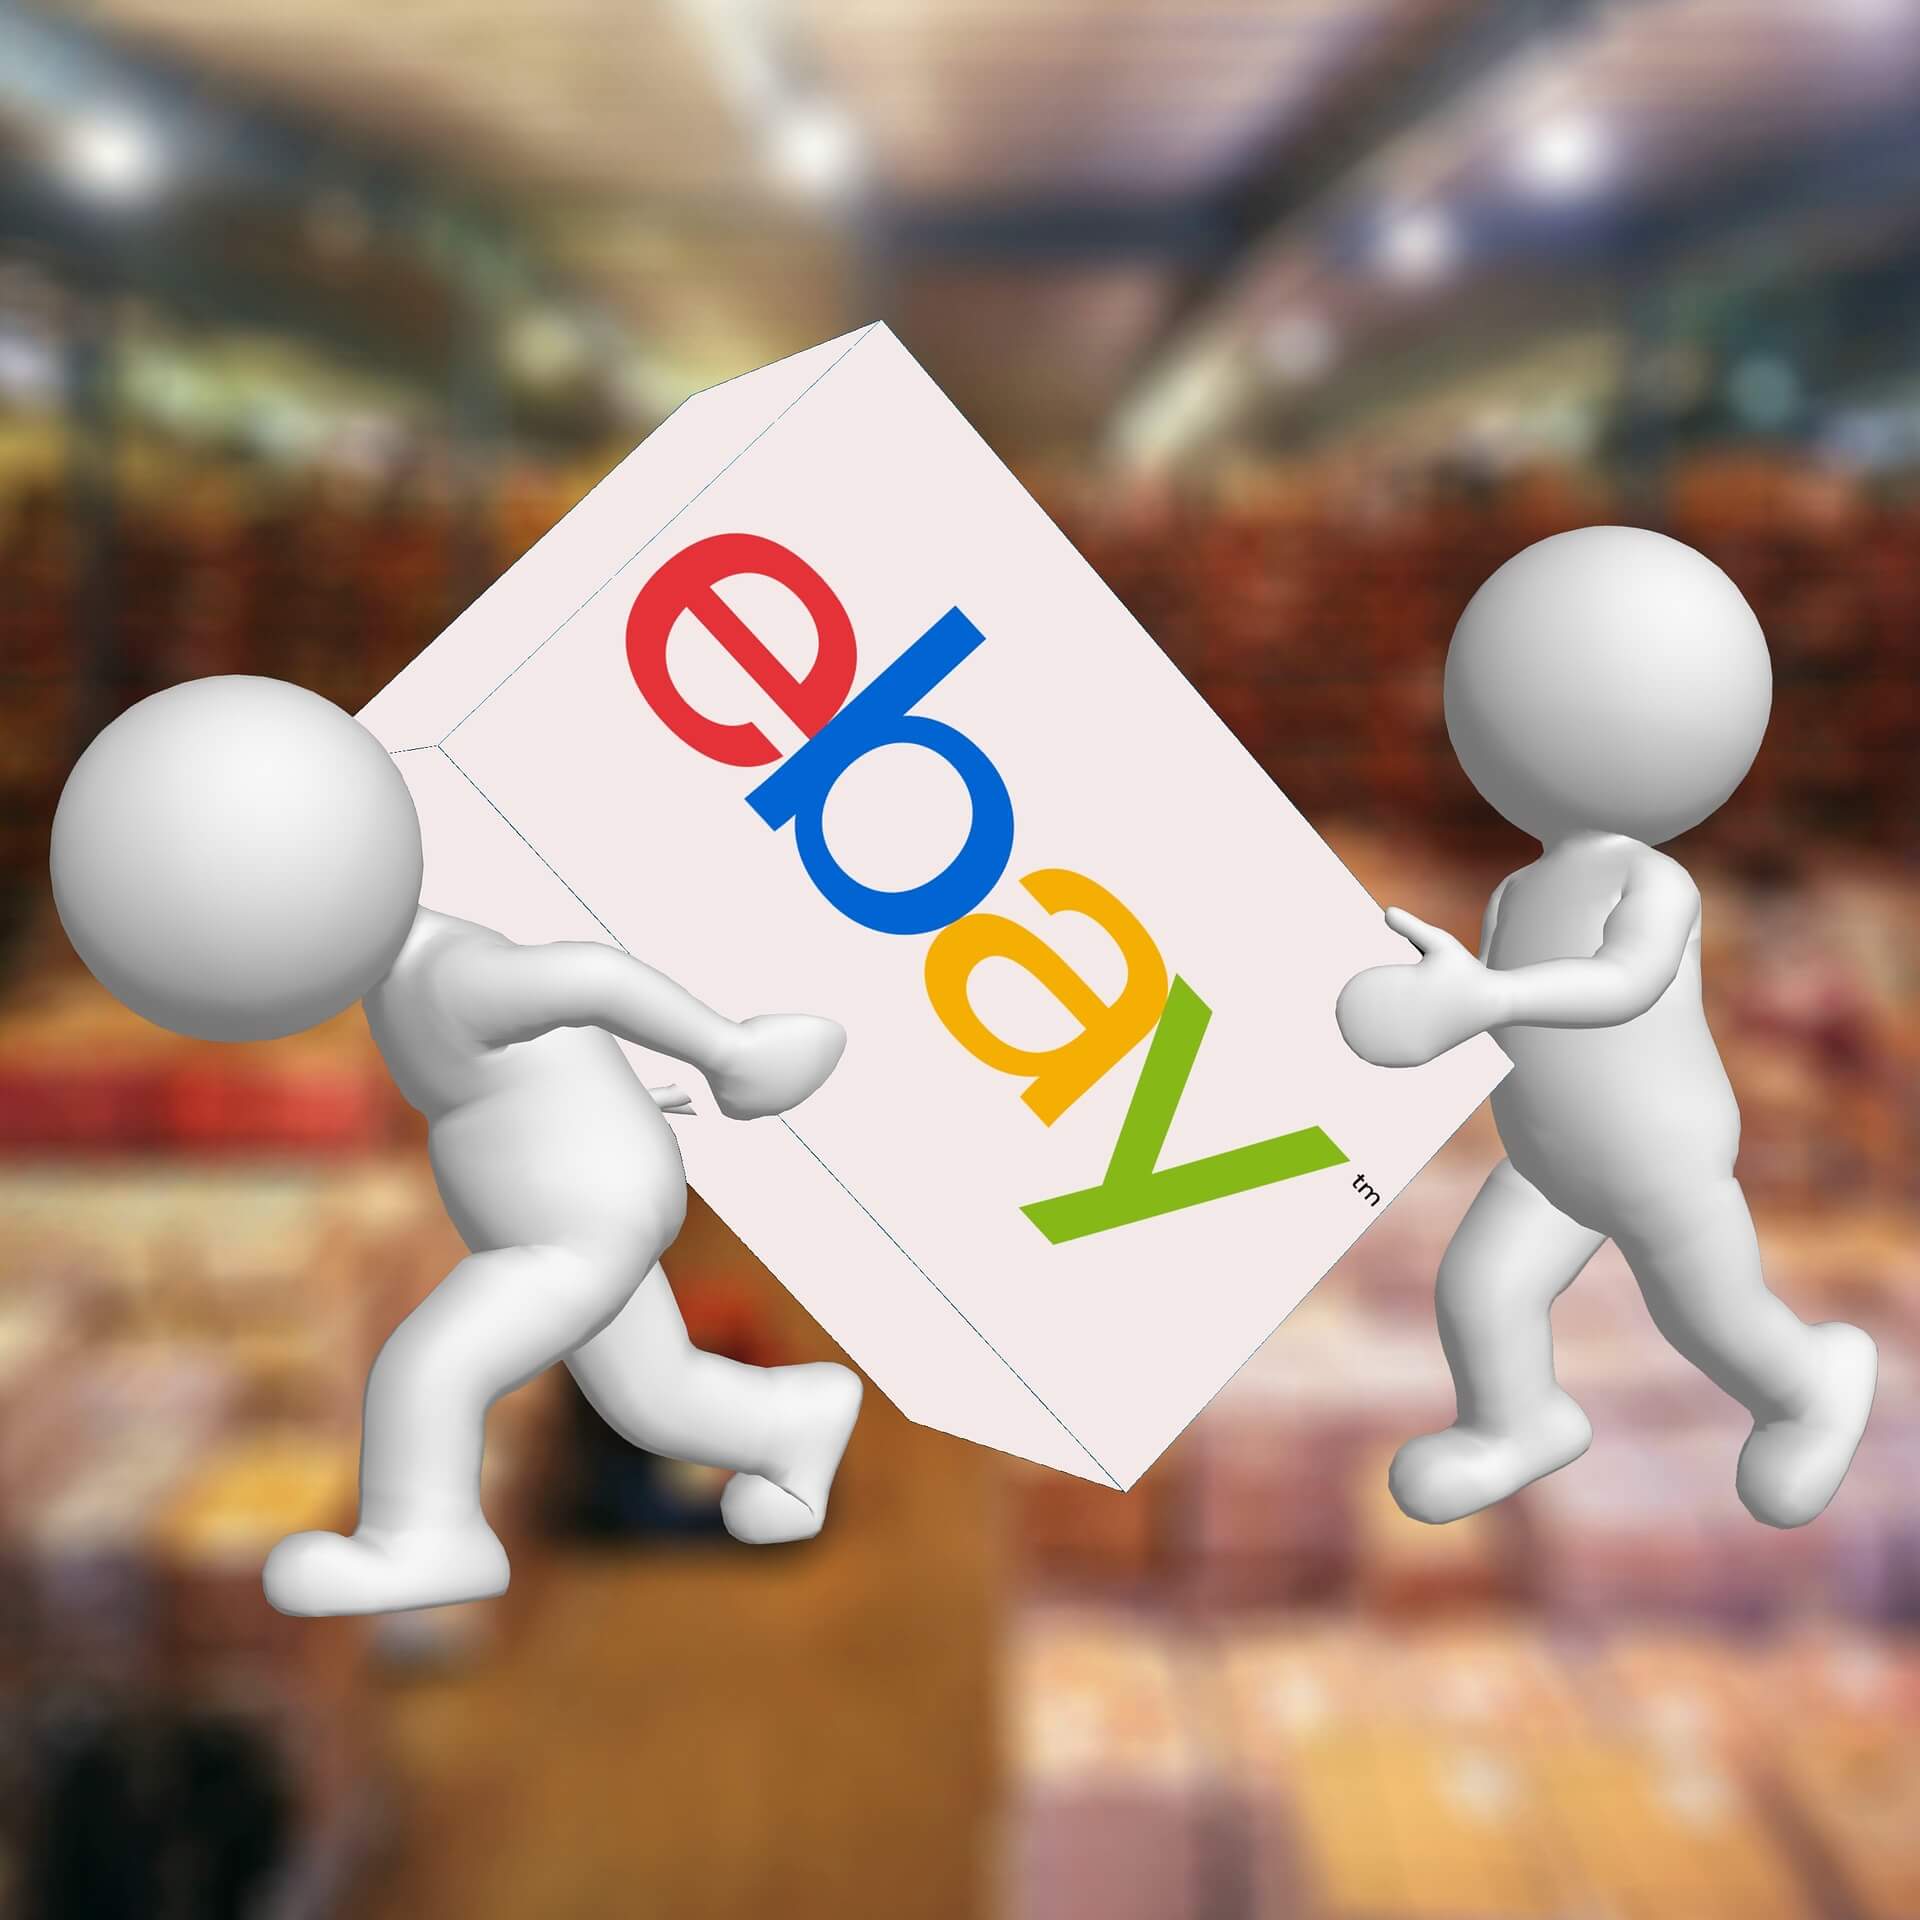 eBay 的發展歷史與市場策略